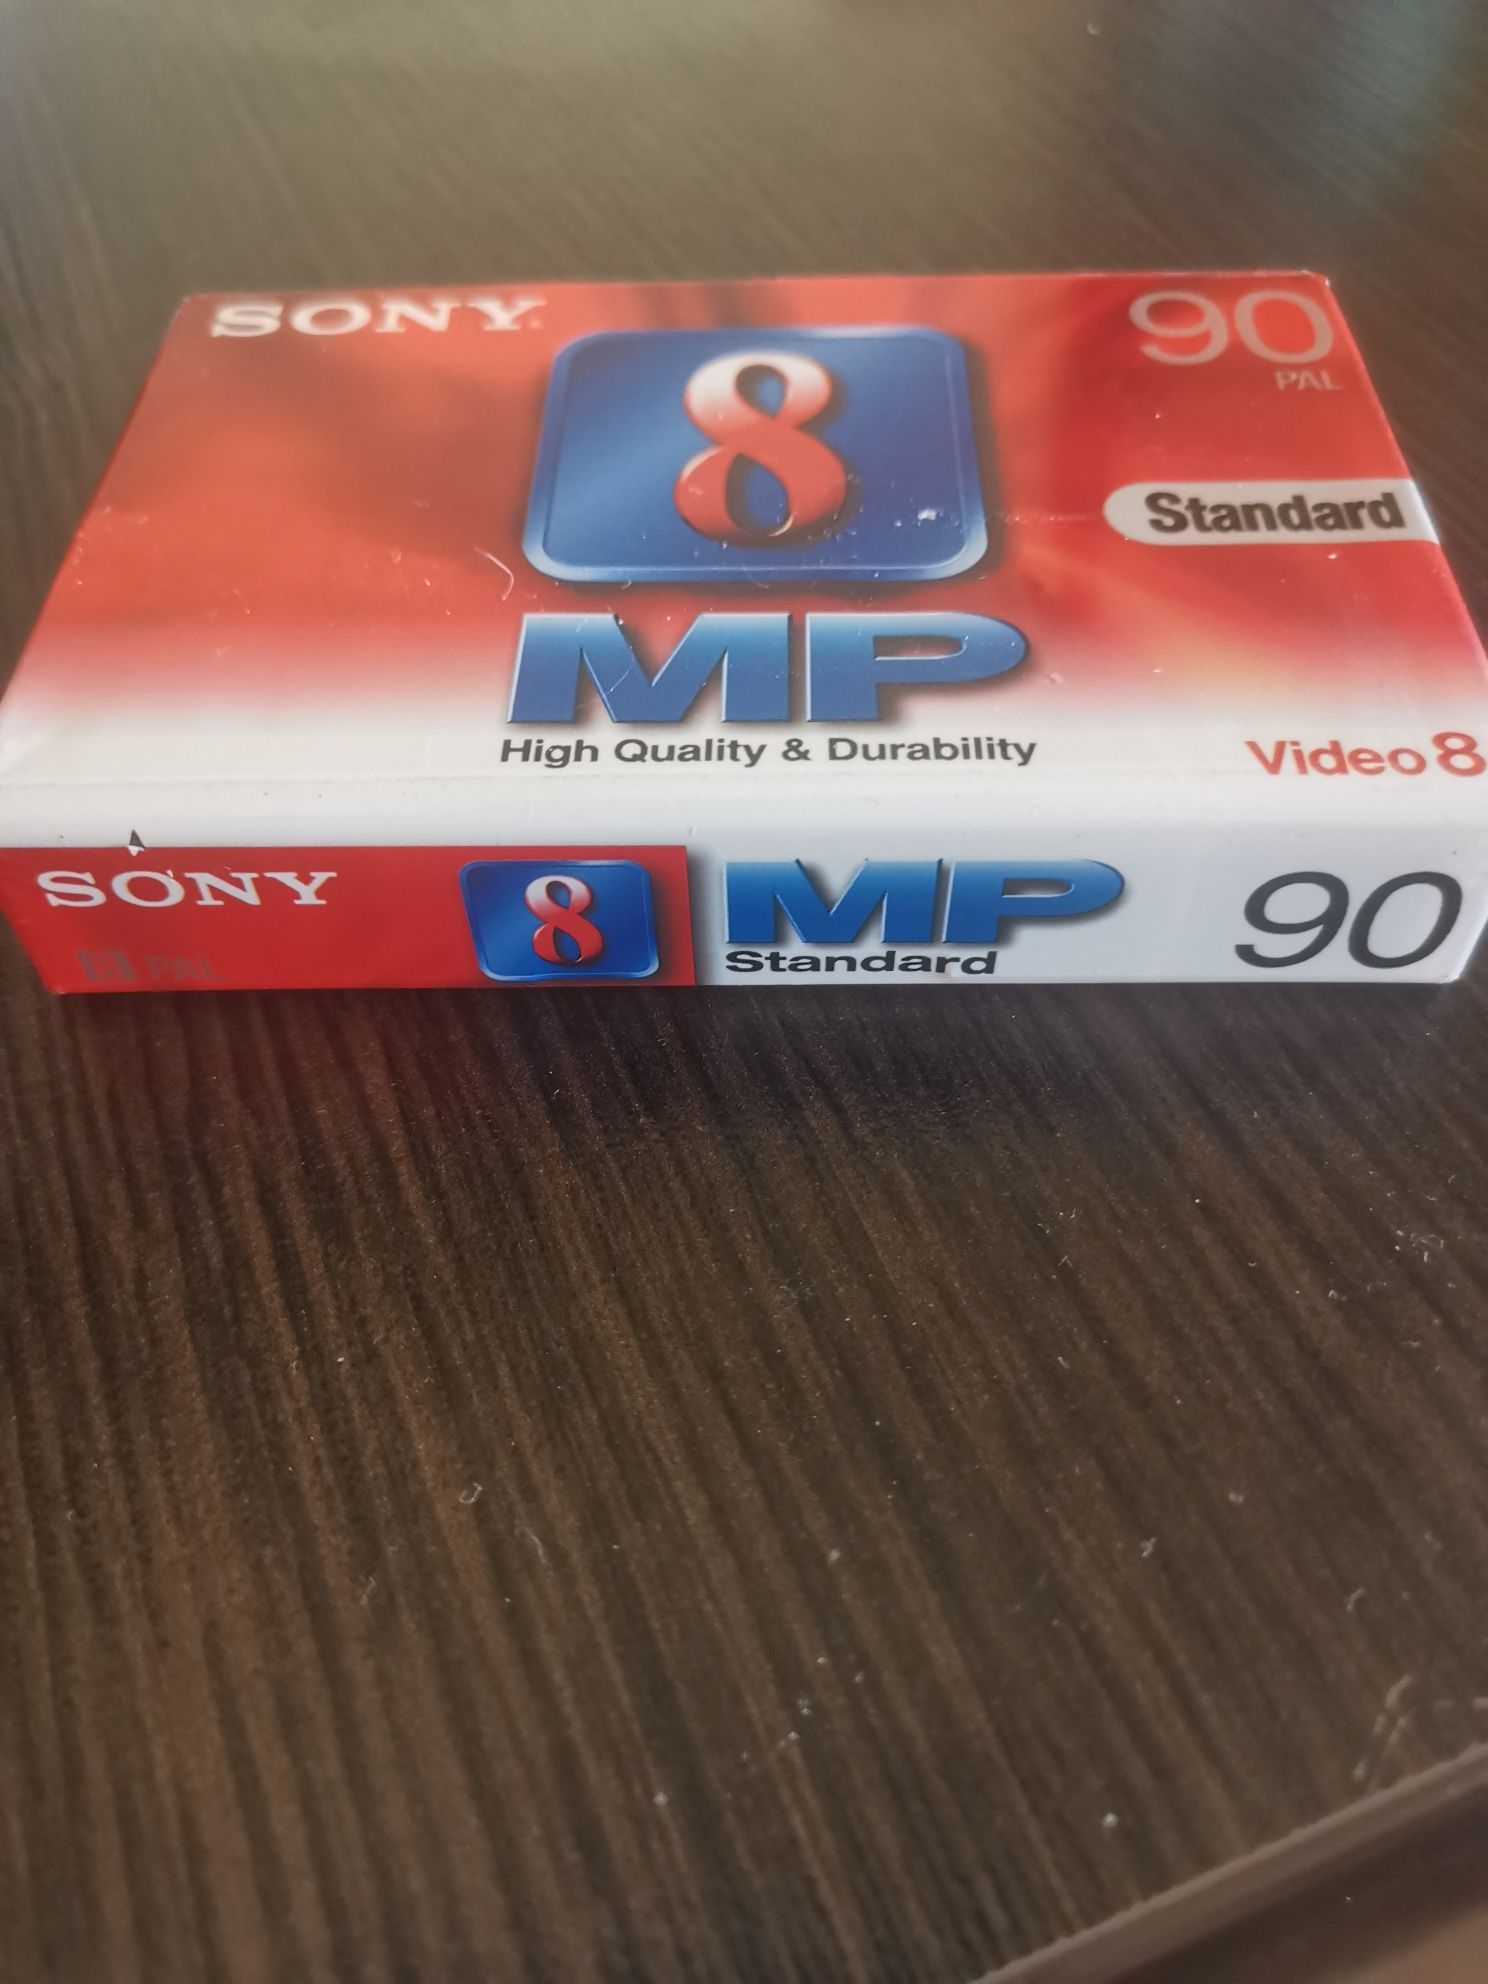 Kaseta Sony Video 8. P5 - 90MP3